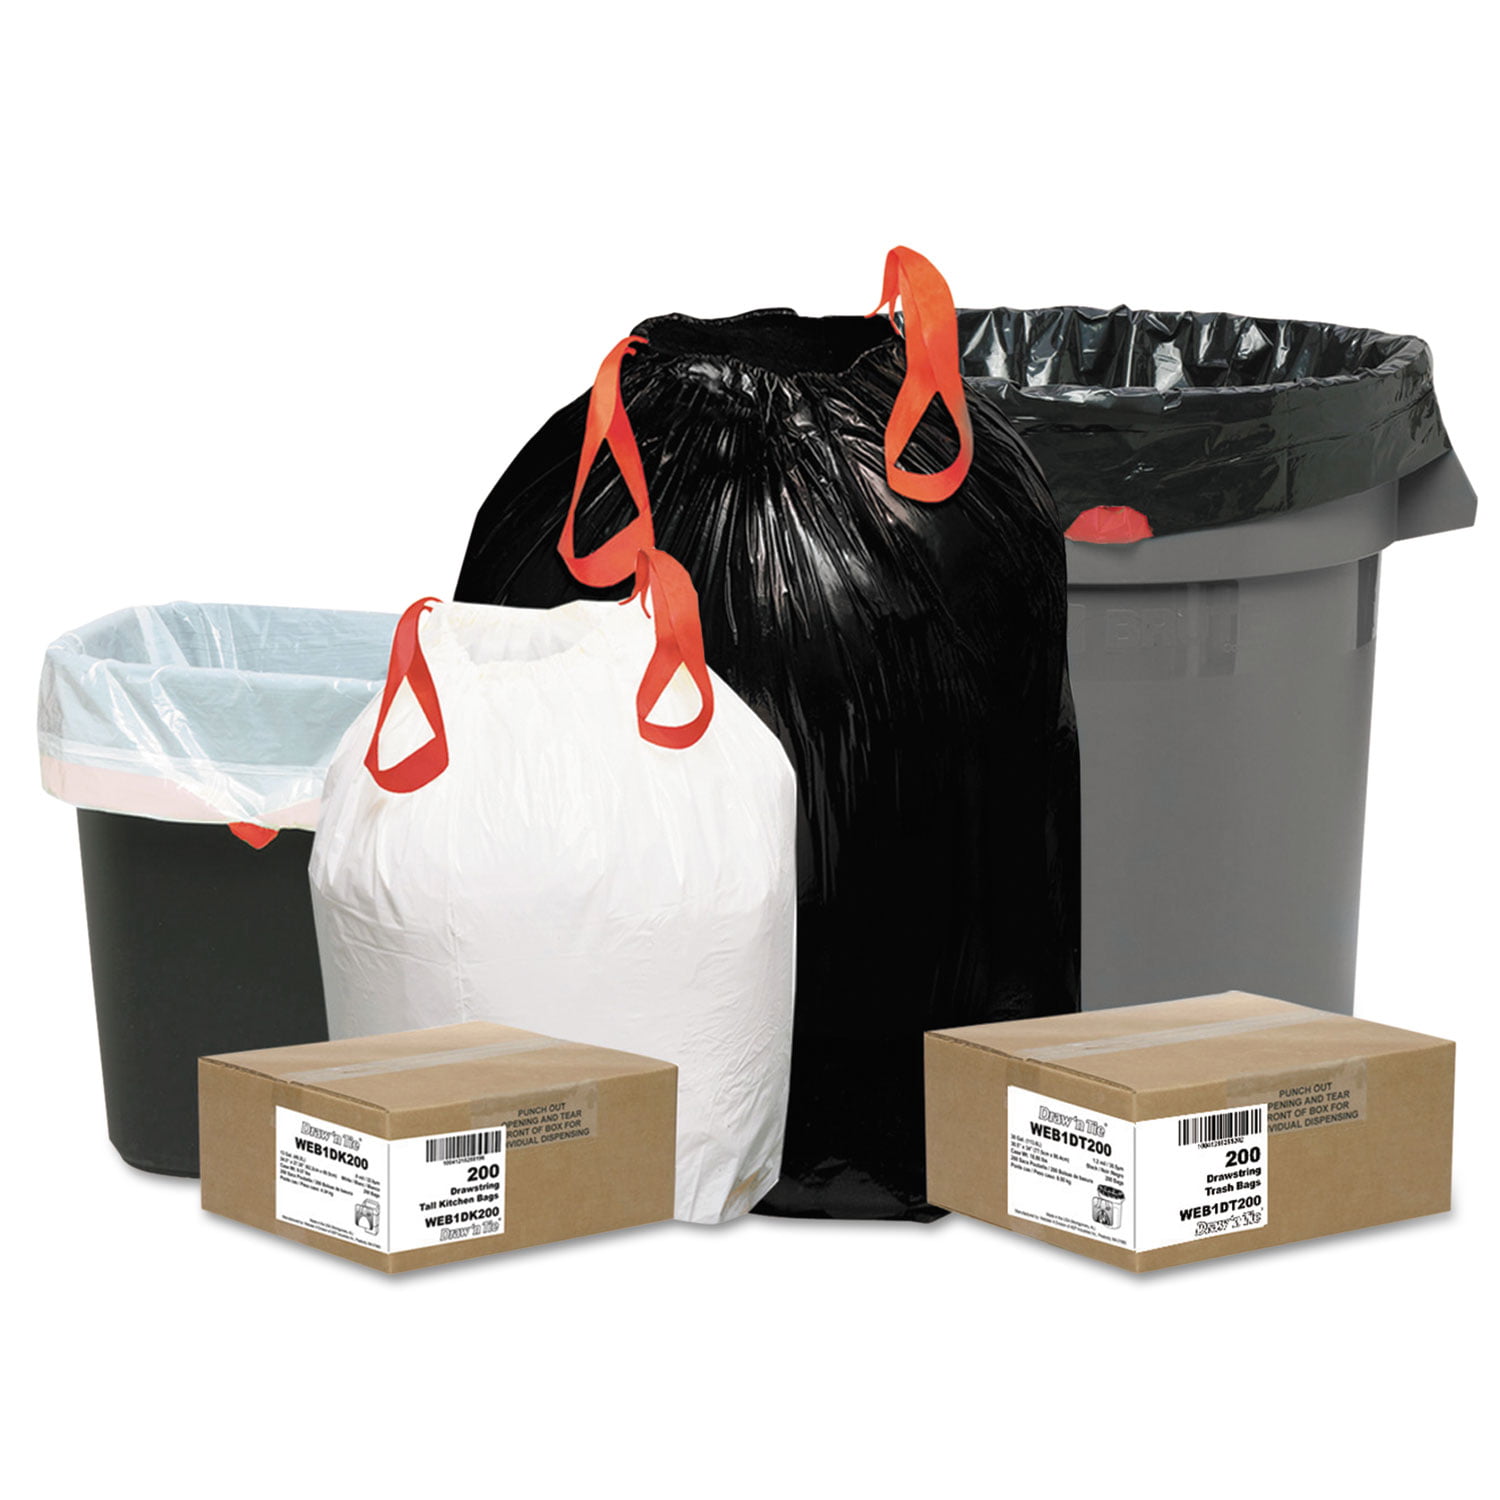 WEBSTER INDUSTRIESHandi 30 Gallons Resin Trash Bags - 60 Count